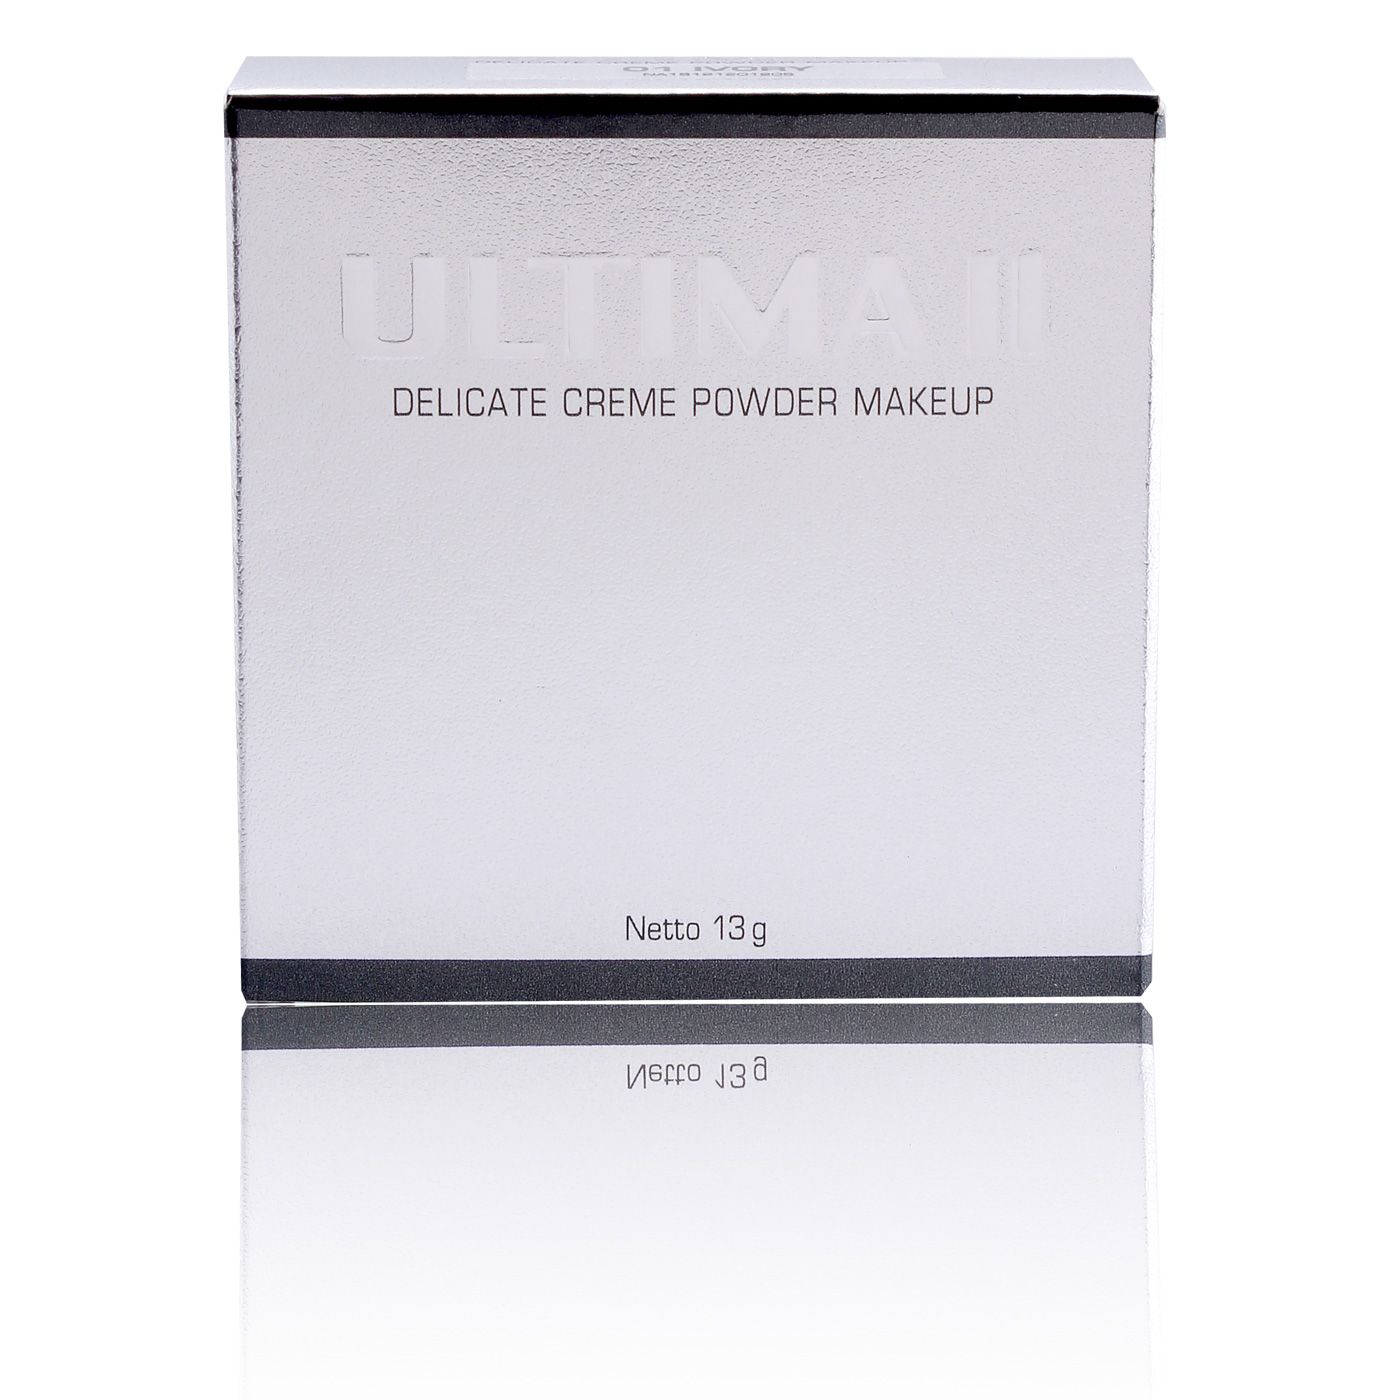 Ultima II Delicate Creme Makeup Ocher (13g) - 3